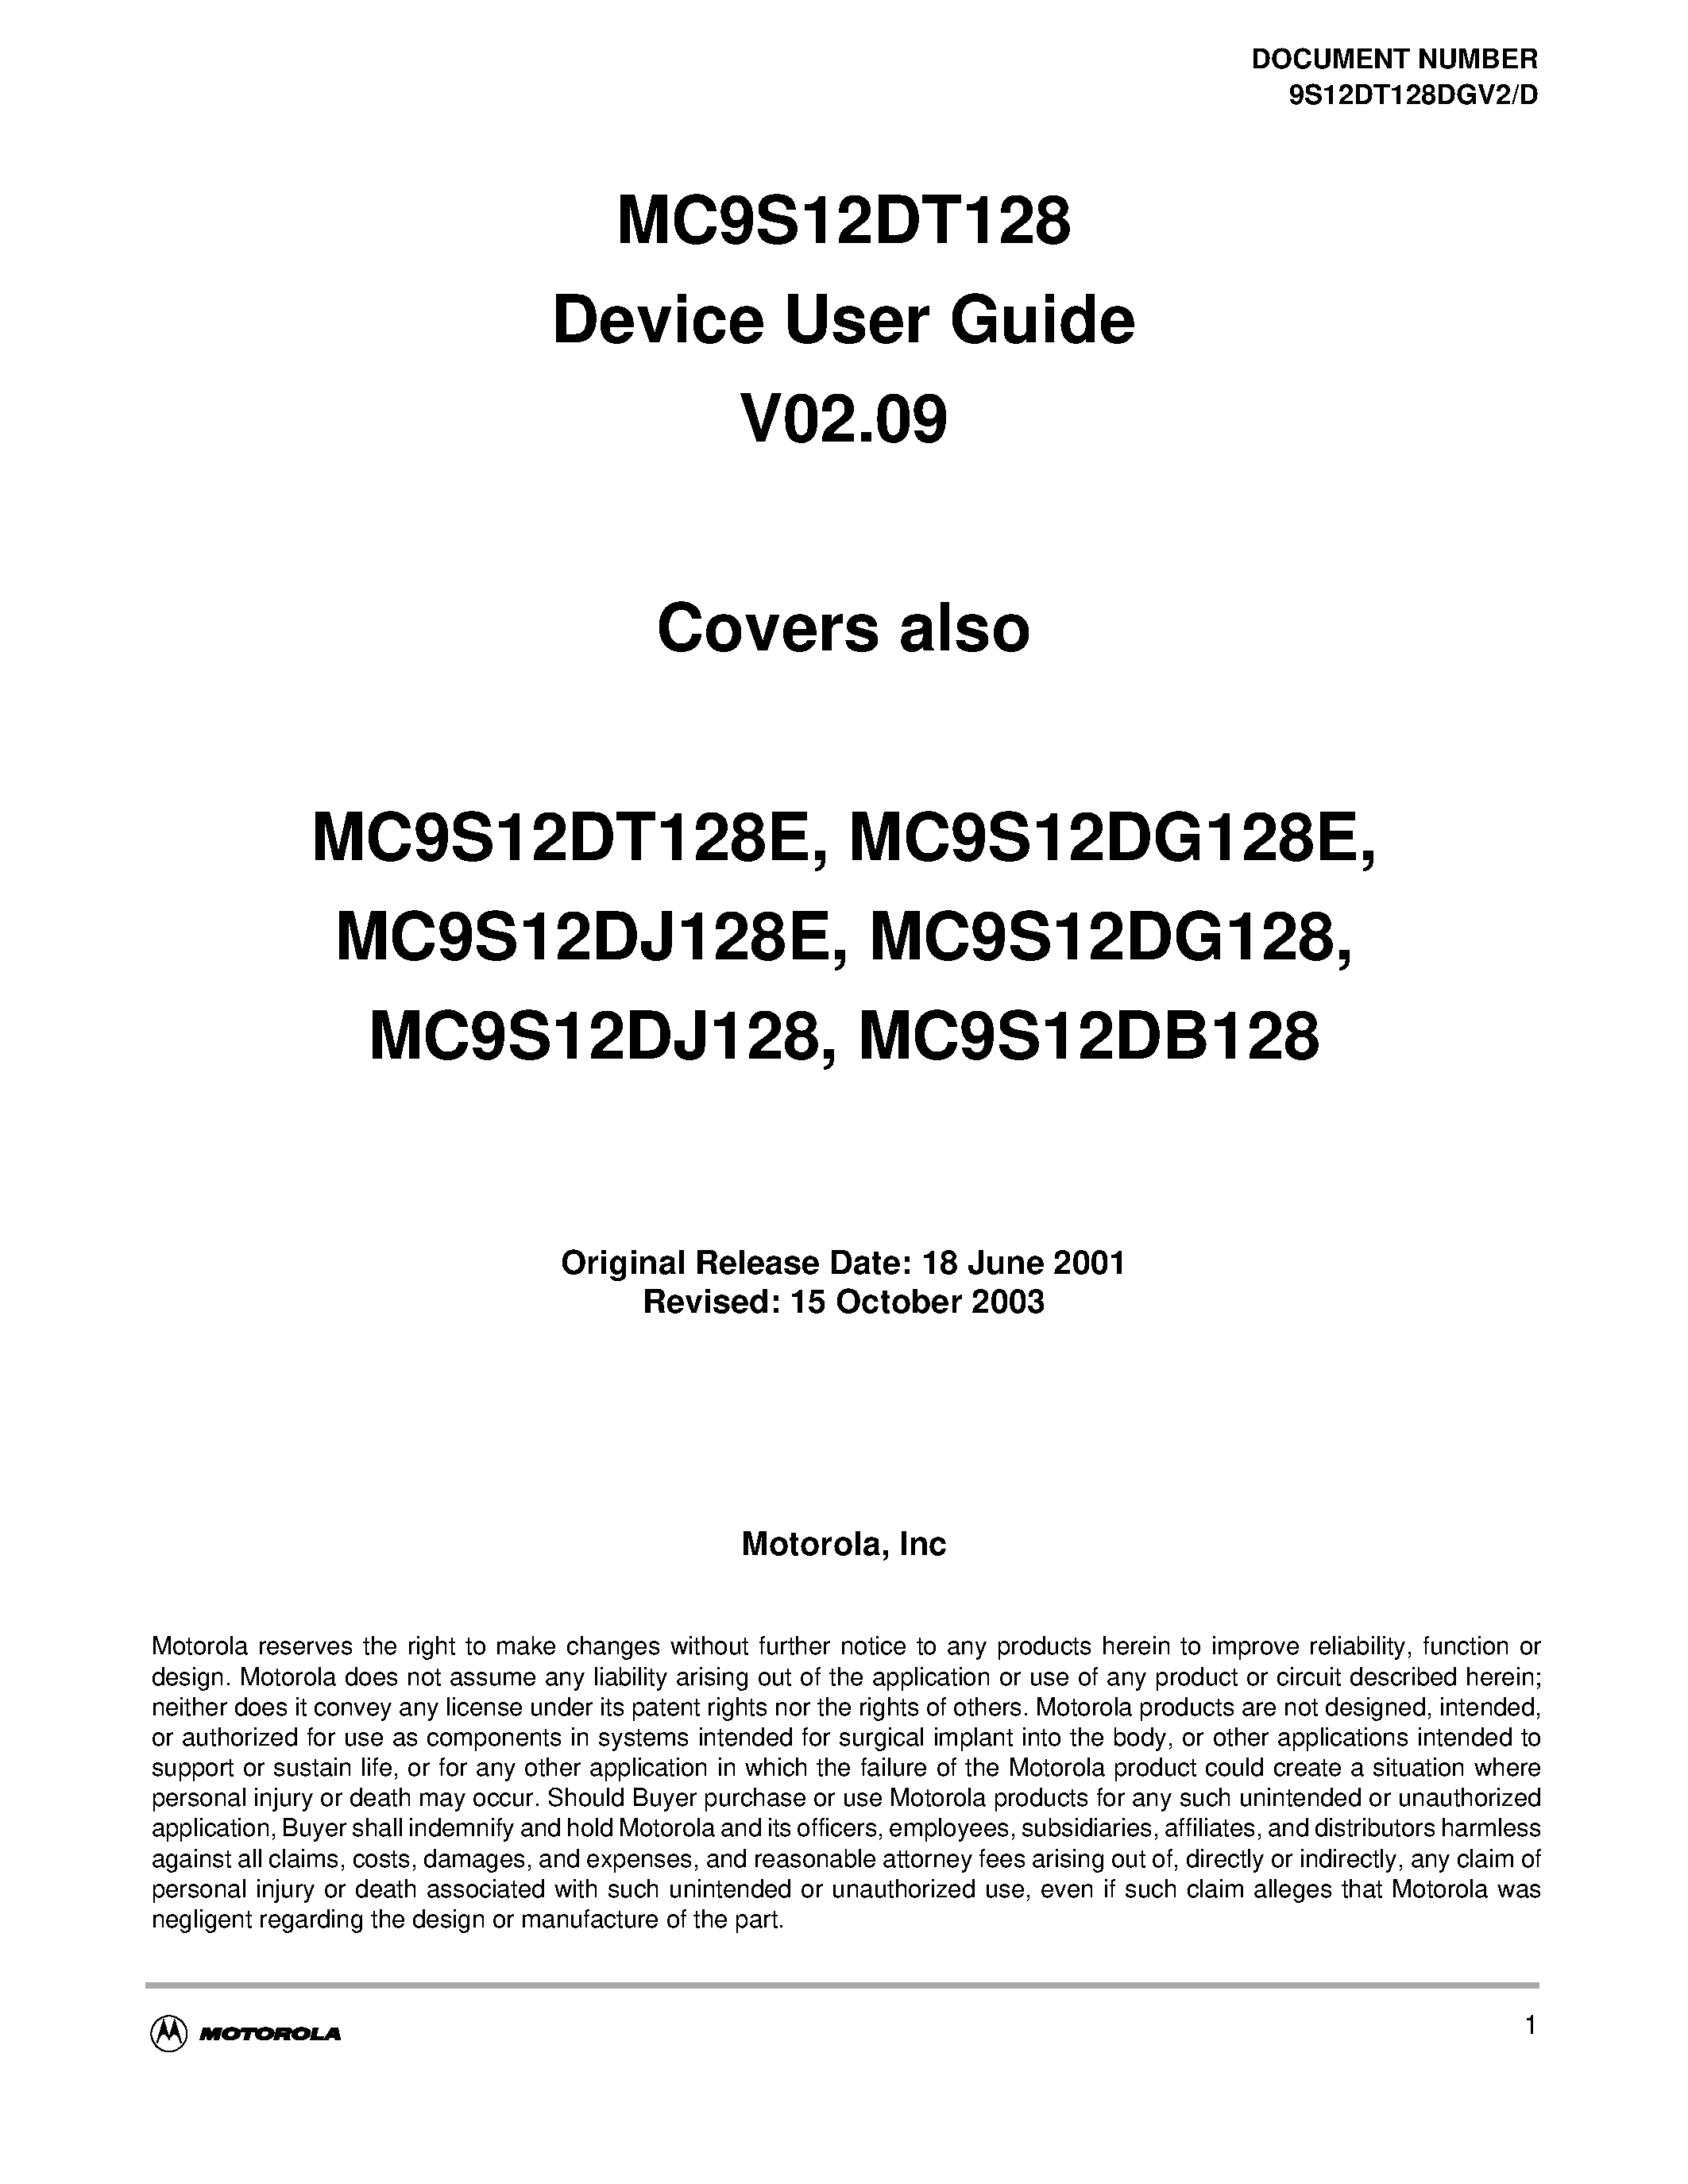 Datasheet S12MMCV4 - MC9S12DT128 Device User Guide V02.09 page 1